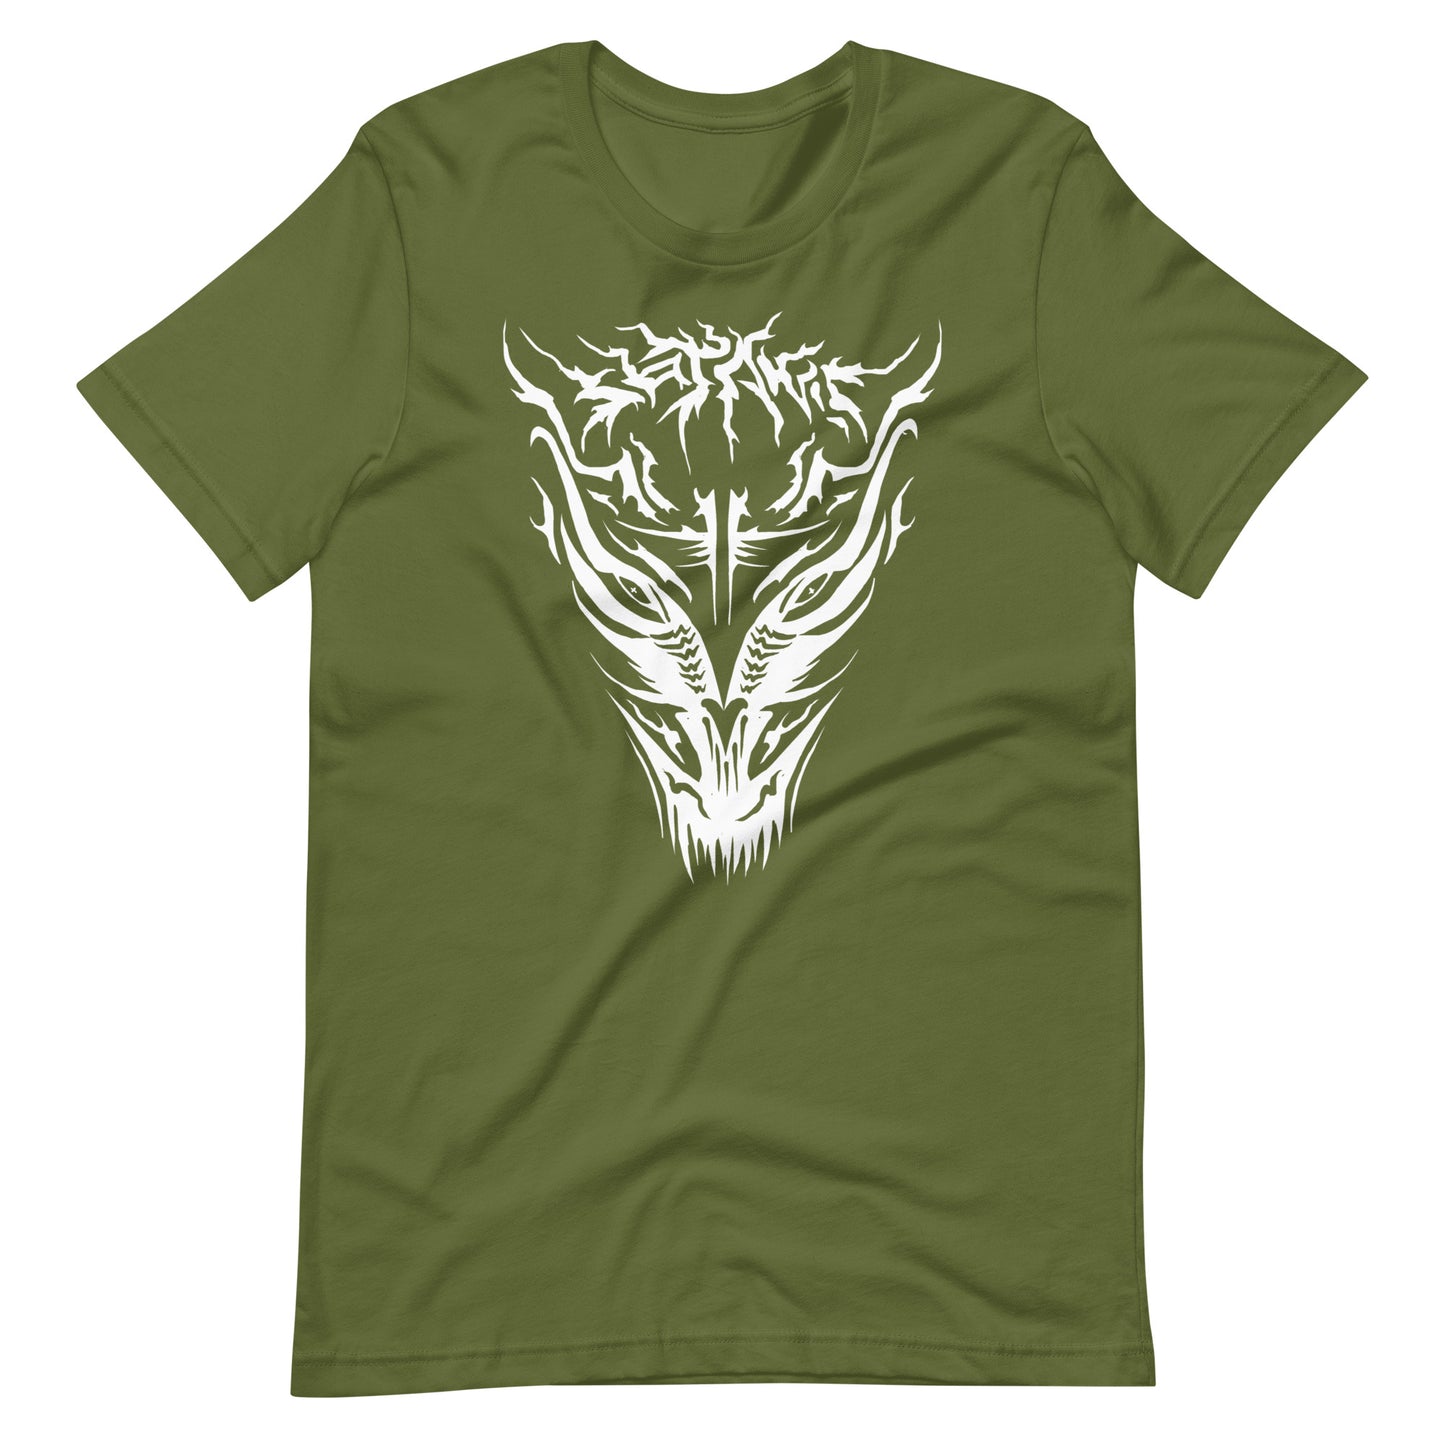 Demon - Men's t-shirt - Olive Front